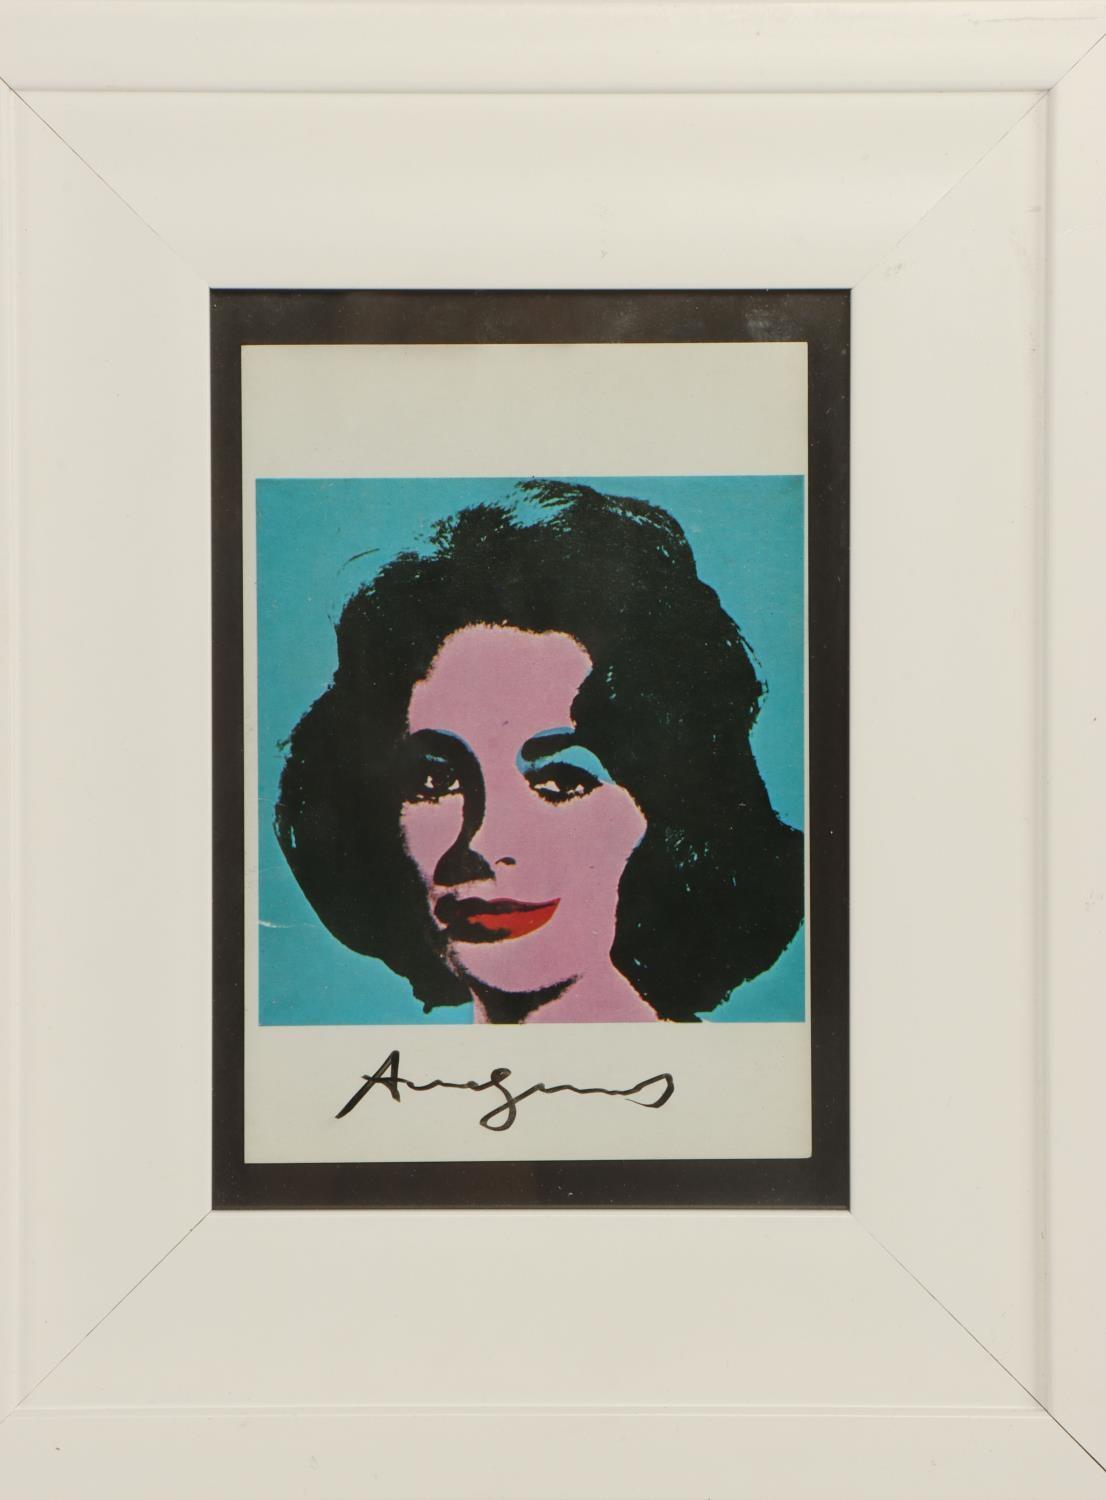 Artwork by Andy Warhol, Elizabeth Taylor, Made of Silk screen print